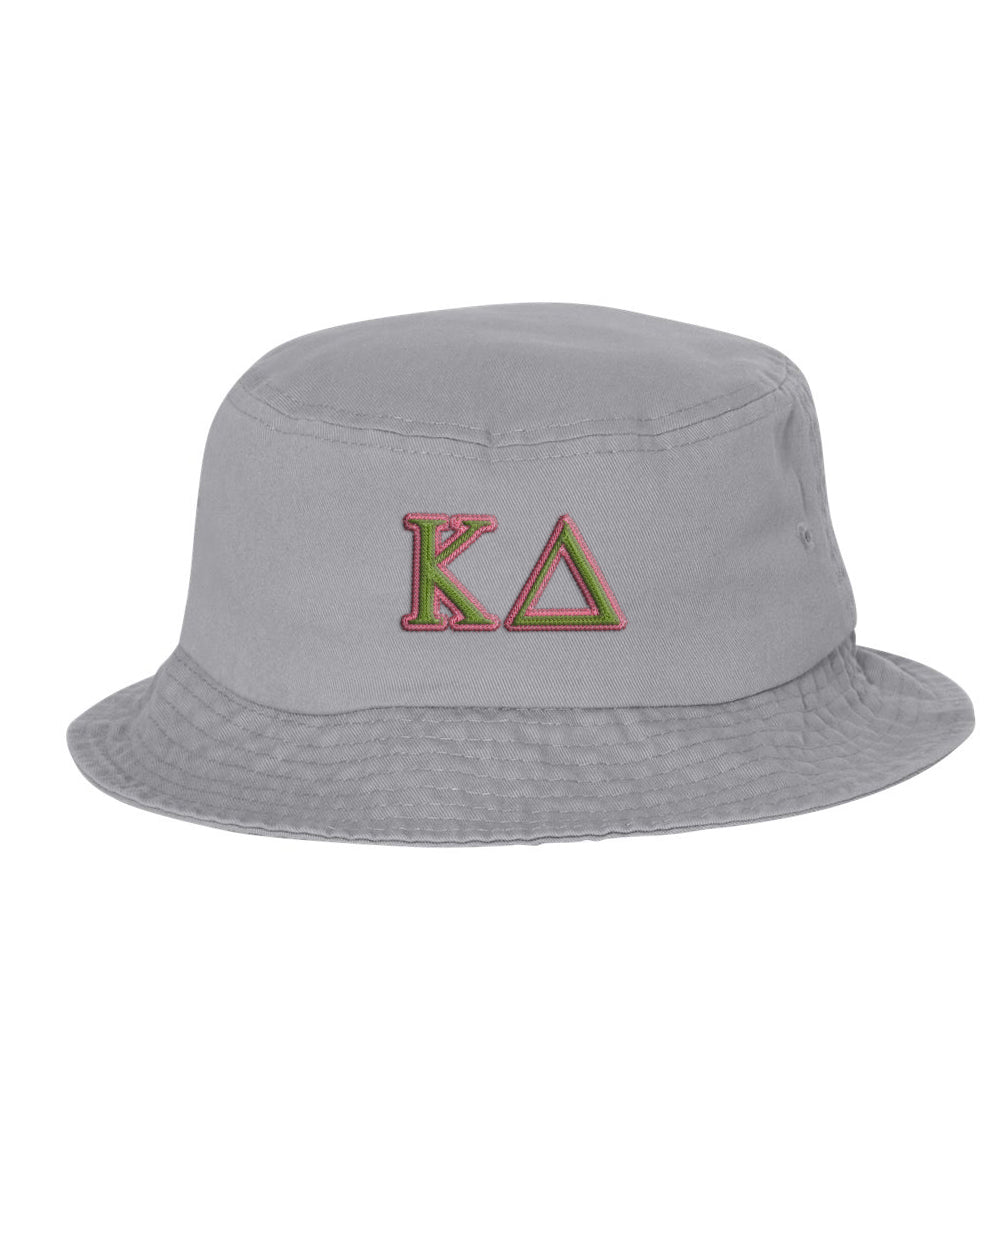 Kappa Delta Embroidered Bucket Hat